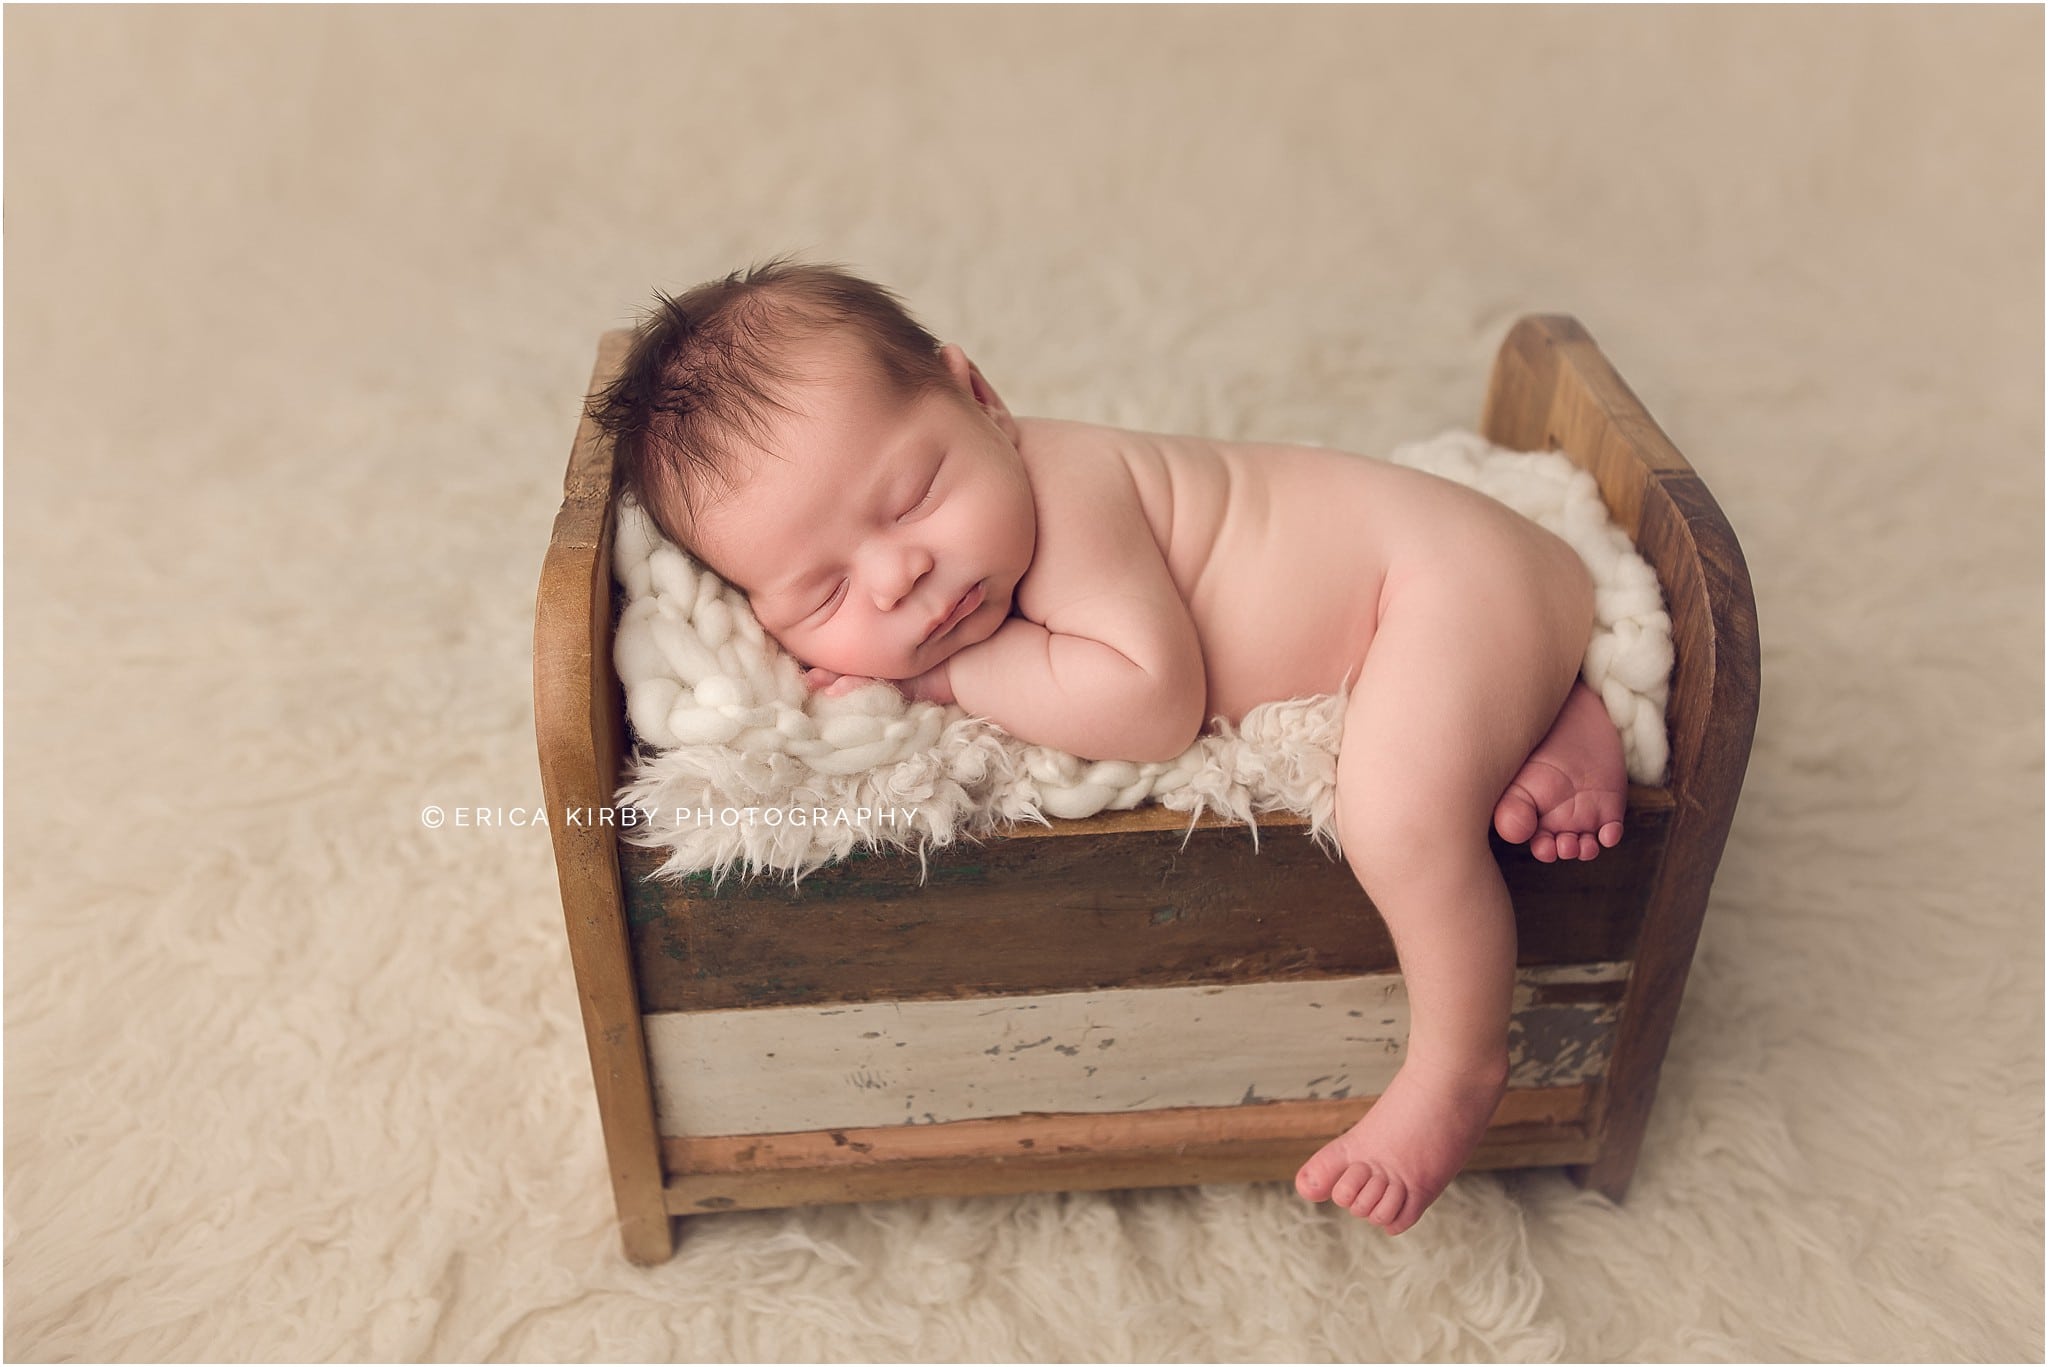 Newborn Photography NWA | Baby boy newborn photography session in Bentonville Arkansas | neutral newborn poses the original photo blocks props little bed